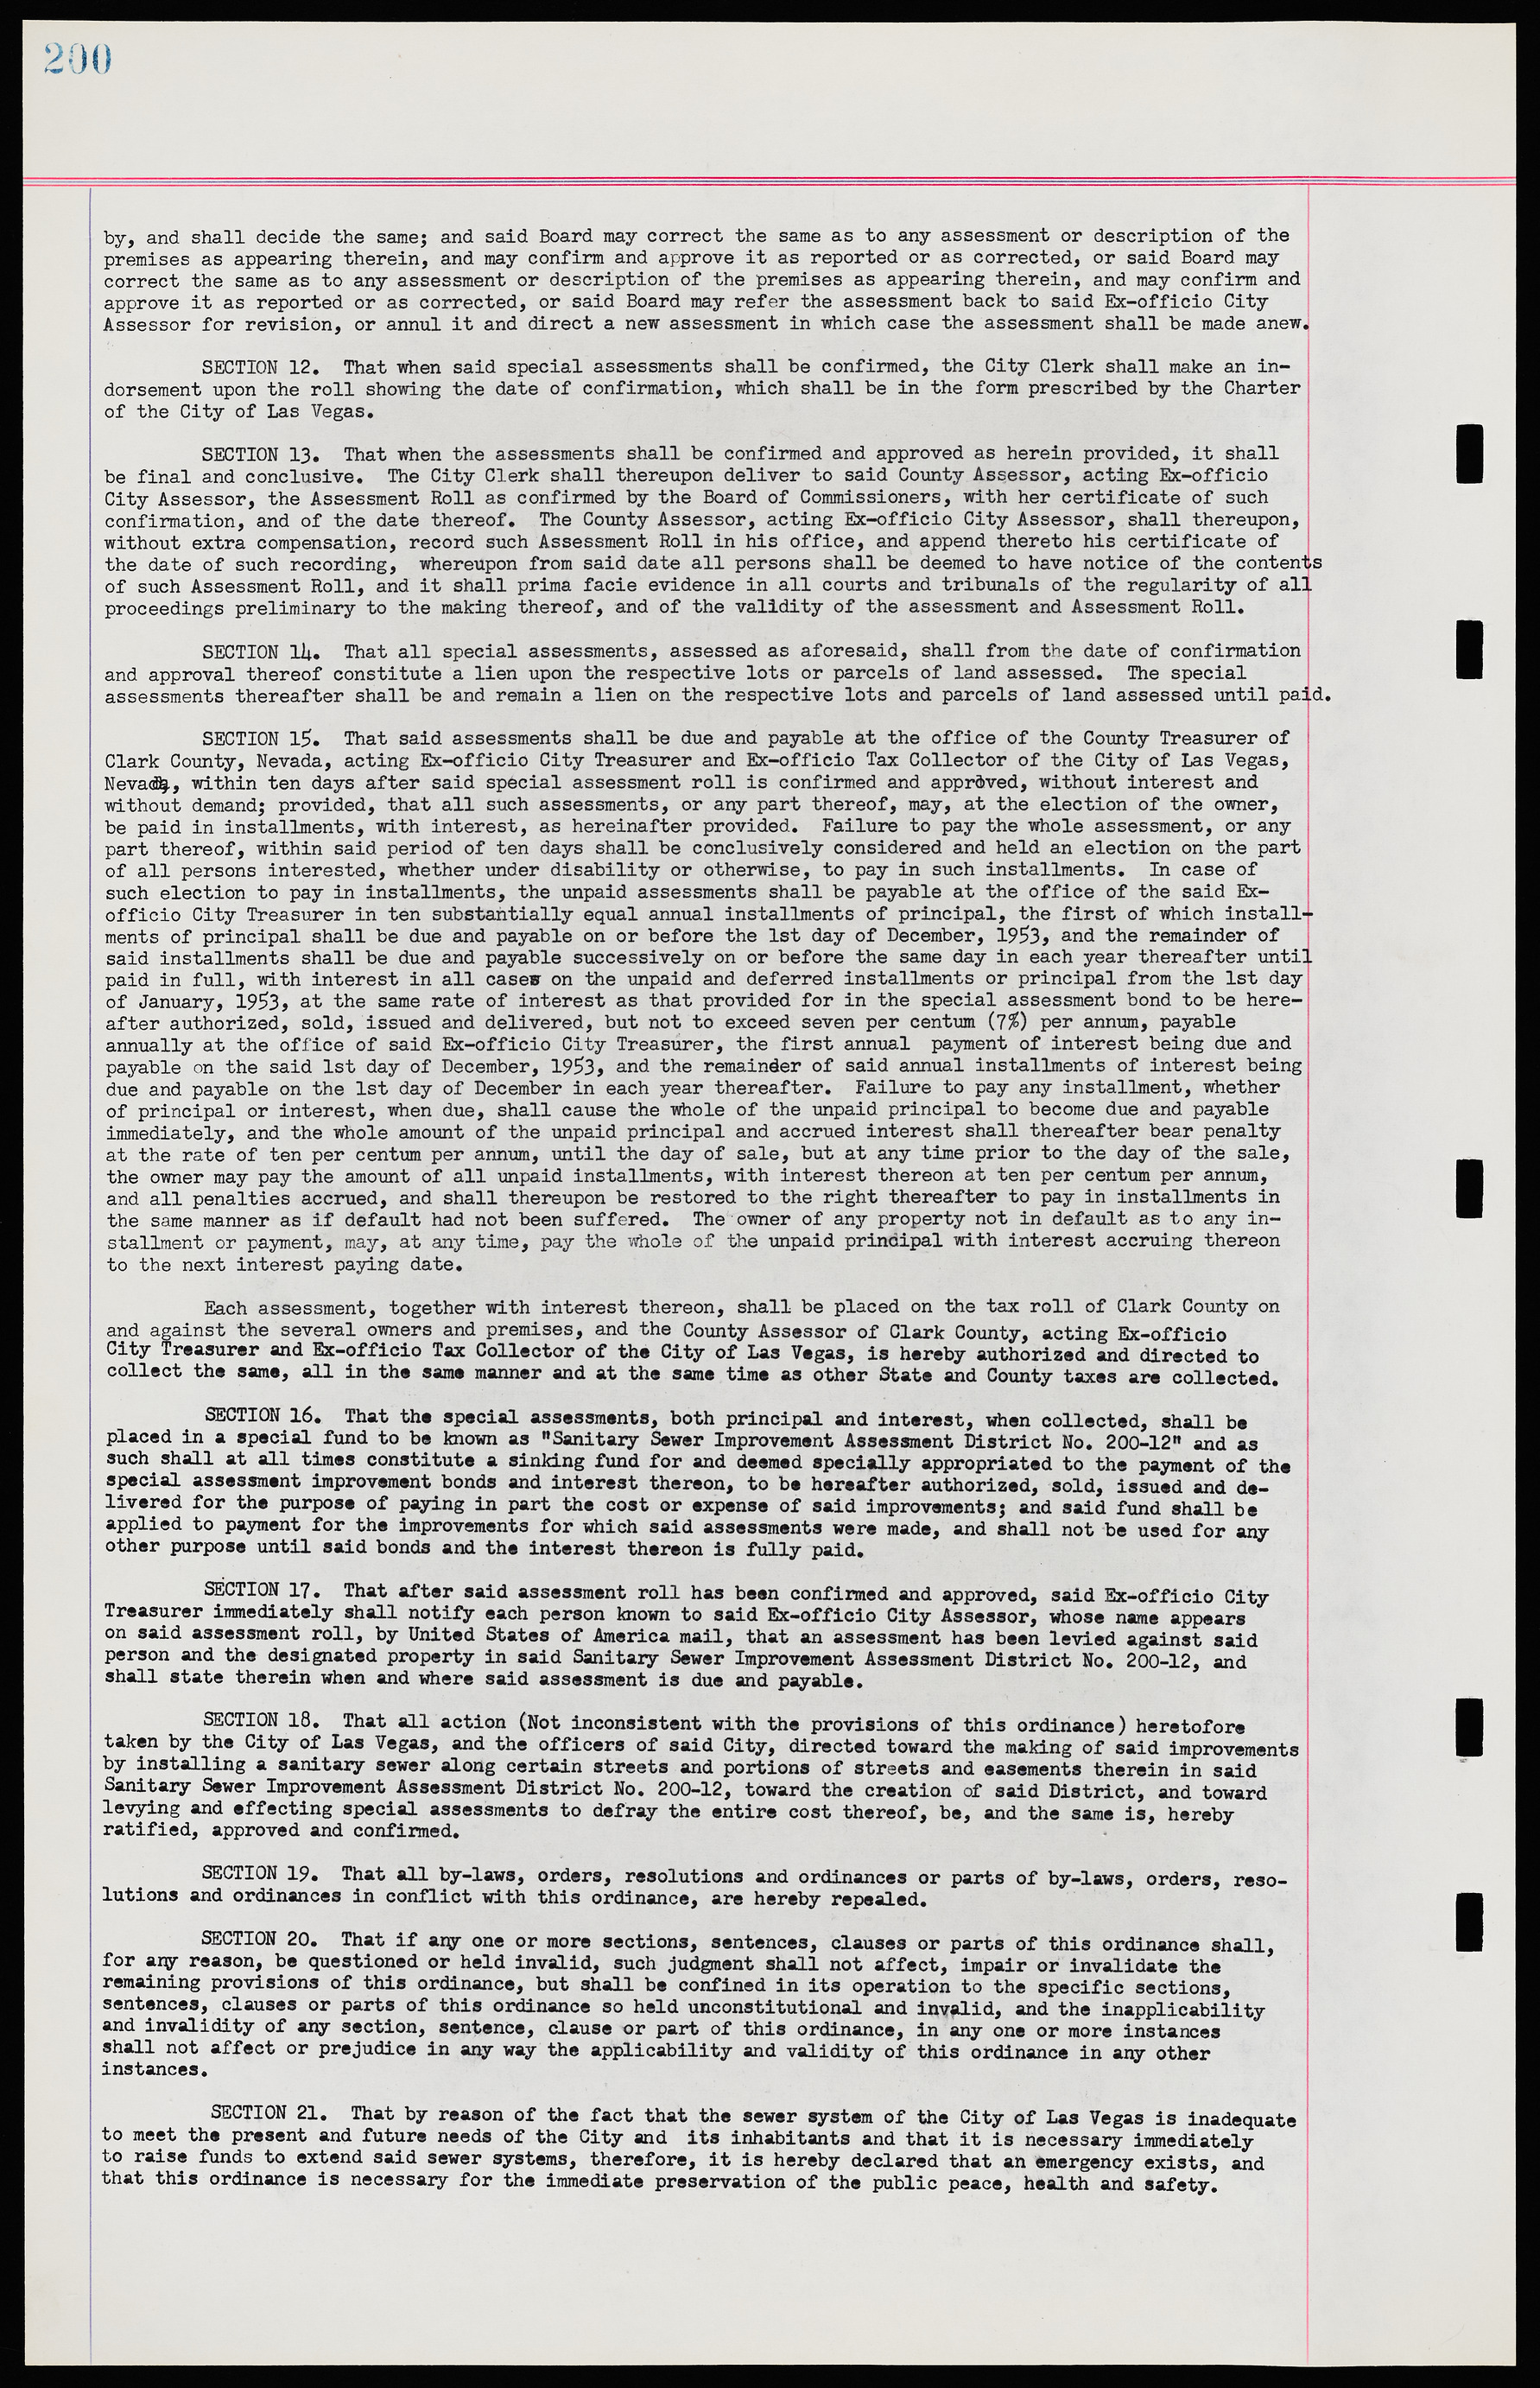 Las Vegas City Ordinances, November 13, 1950 to August 6, 1958, lvc000015-208